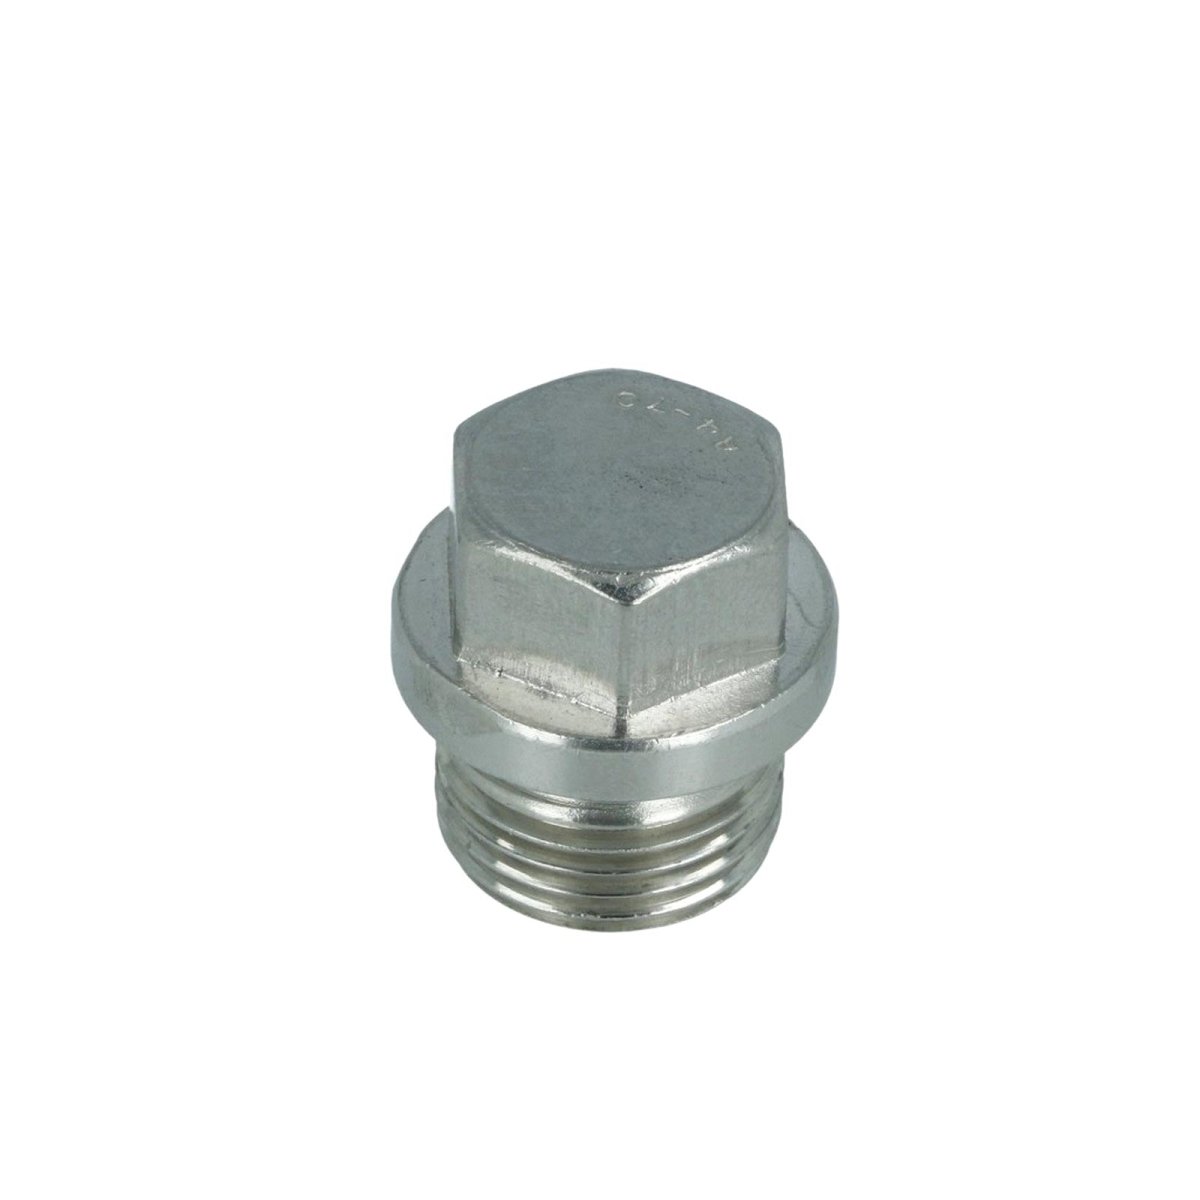 FAMEFORM screw plug for lambda probe thread (stainless steel) - PARTS33 GmbH